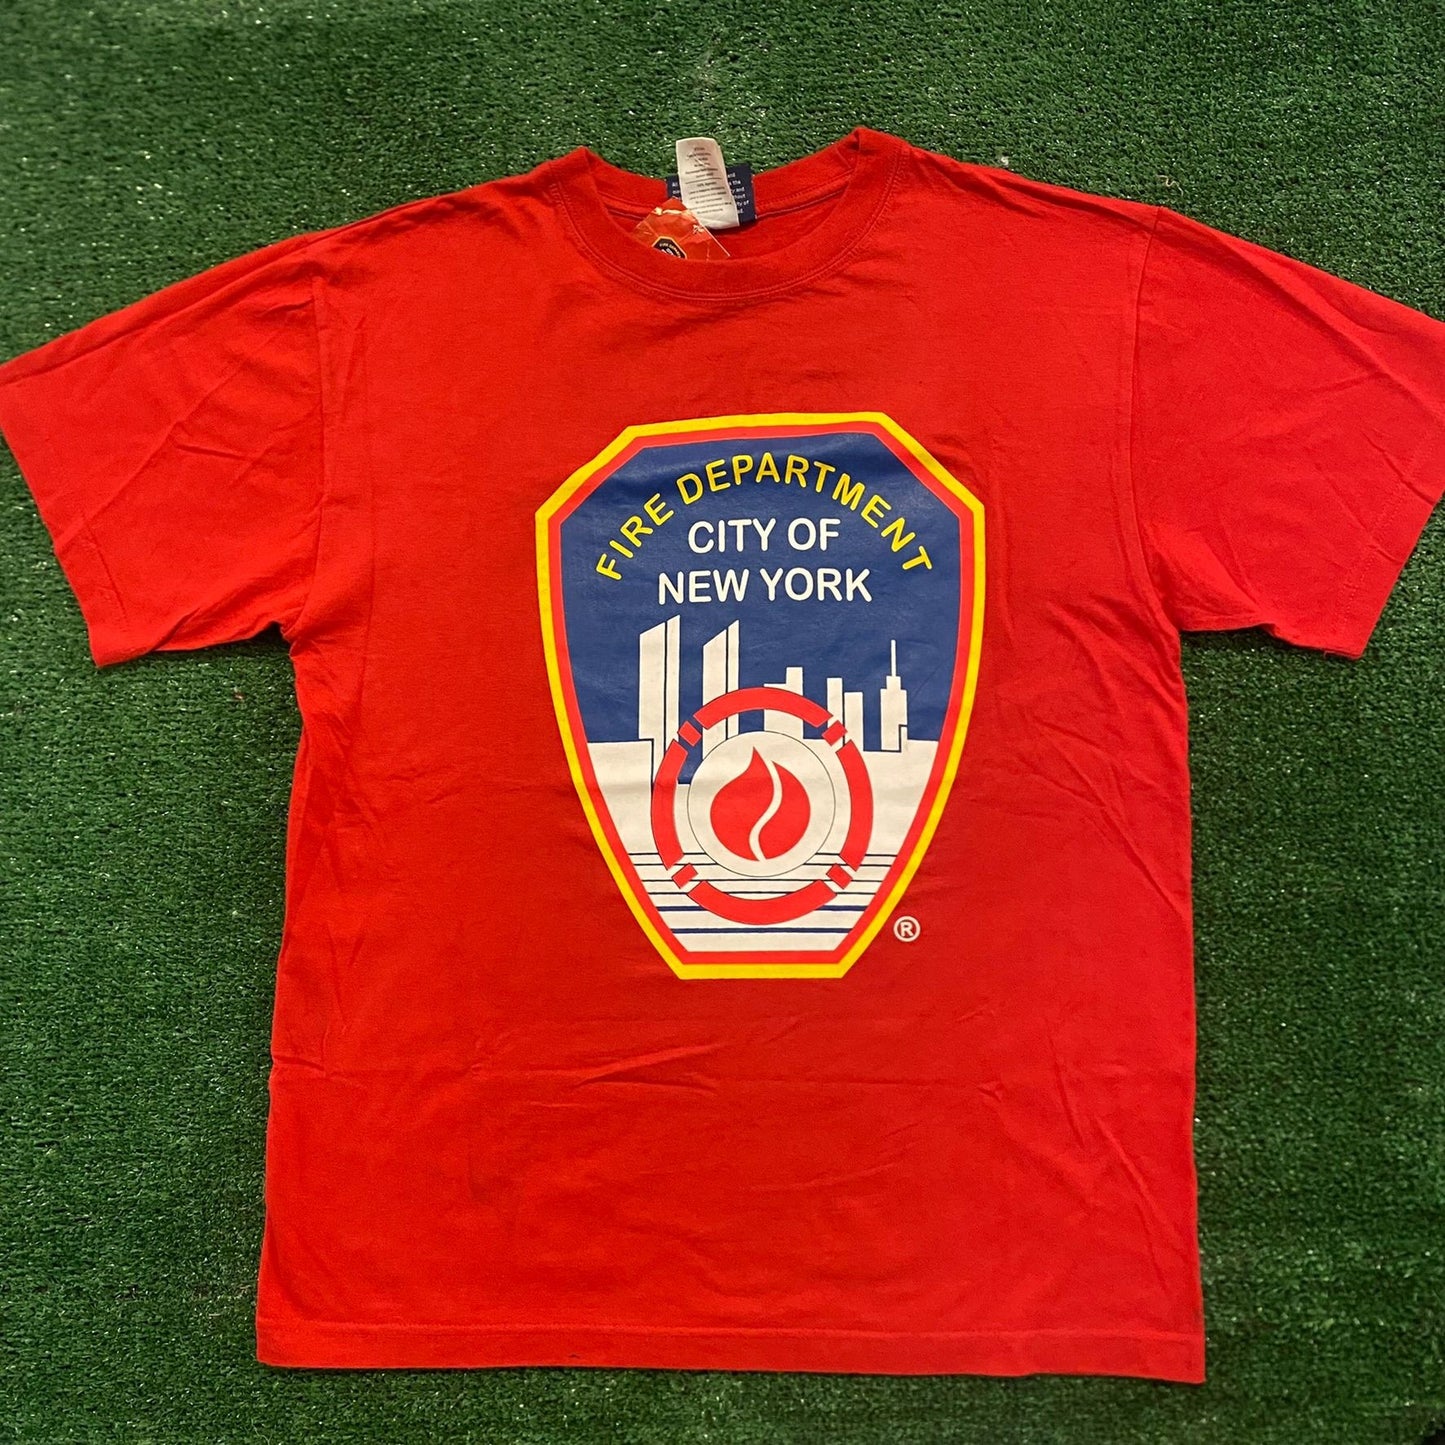 FDNY Fire Department New York Vintage Firefighter T-Shirt